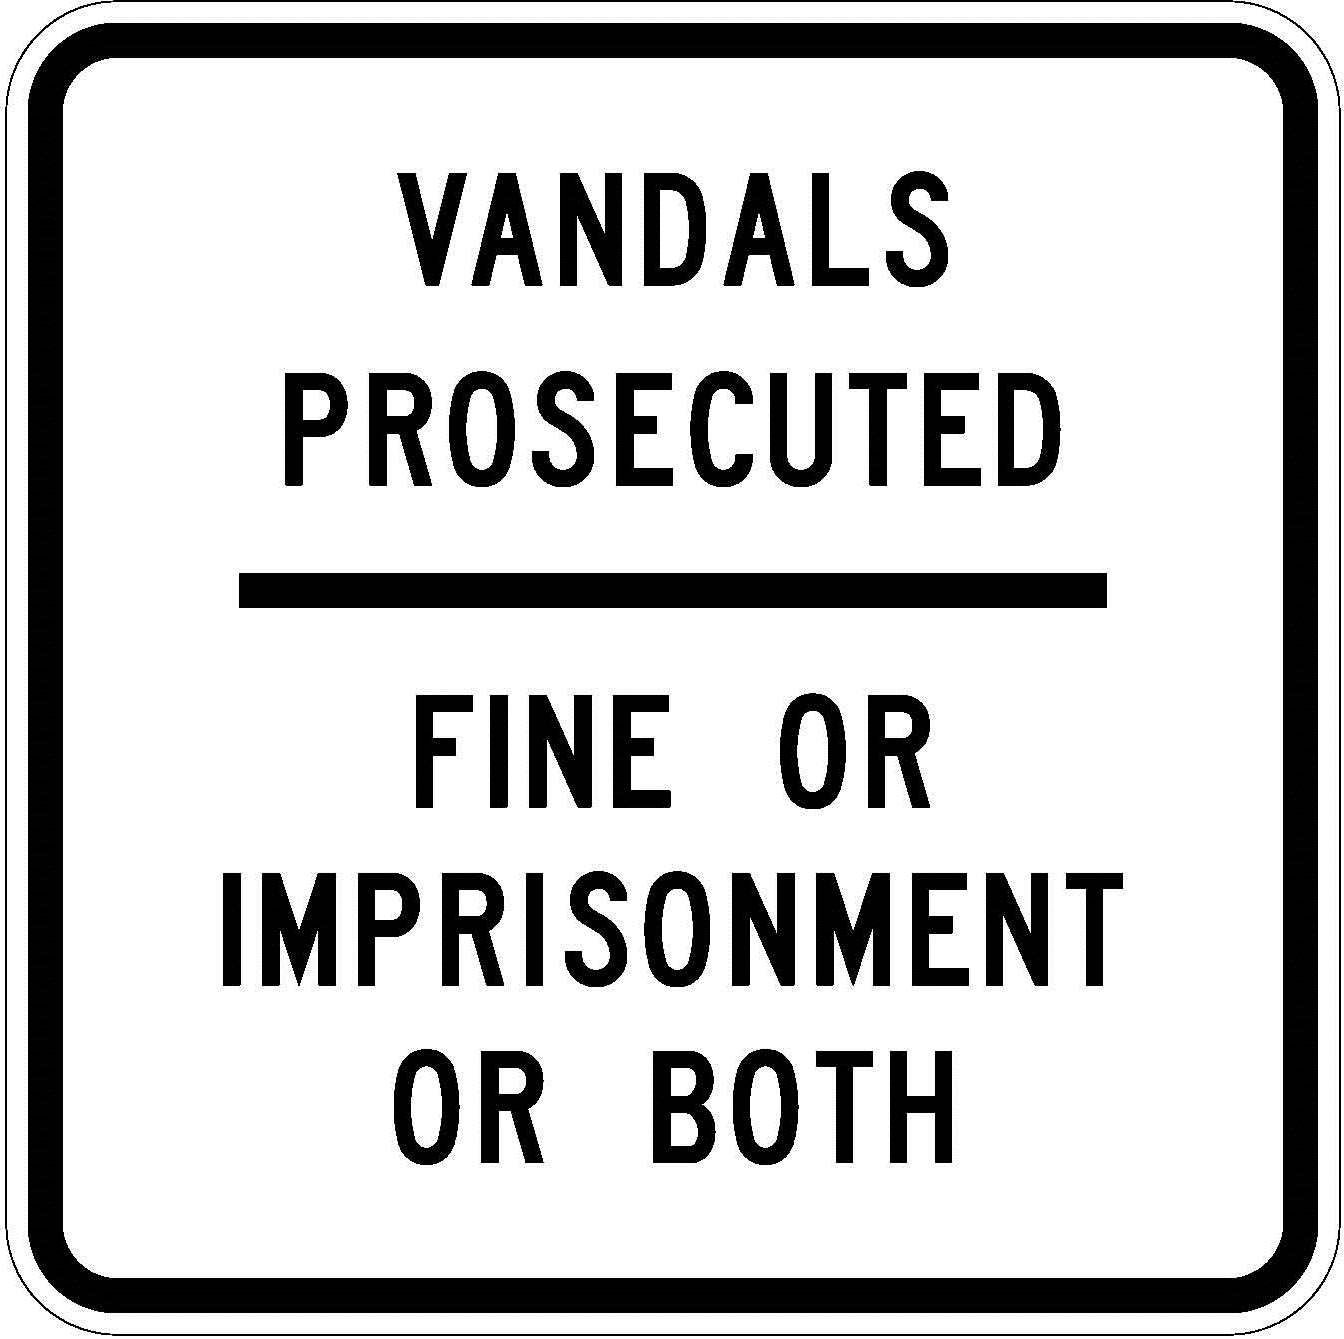 R52-2 Vandals Prosecuted - Fine Or Imprisonment Or Both JPEG detail image